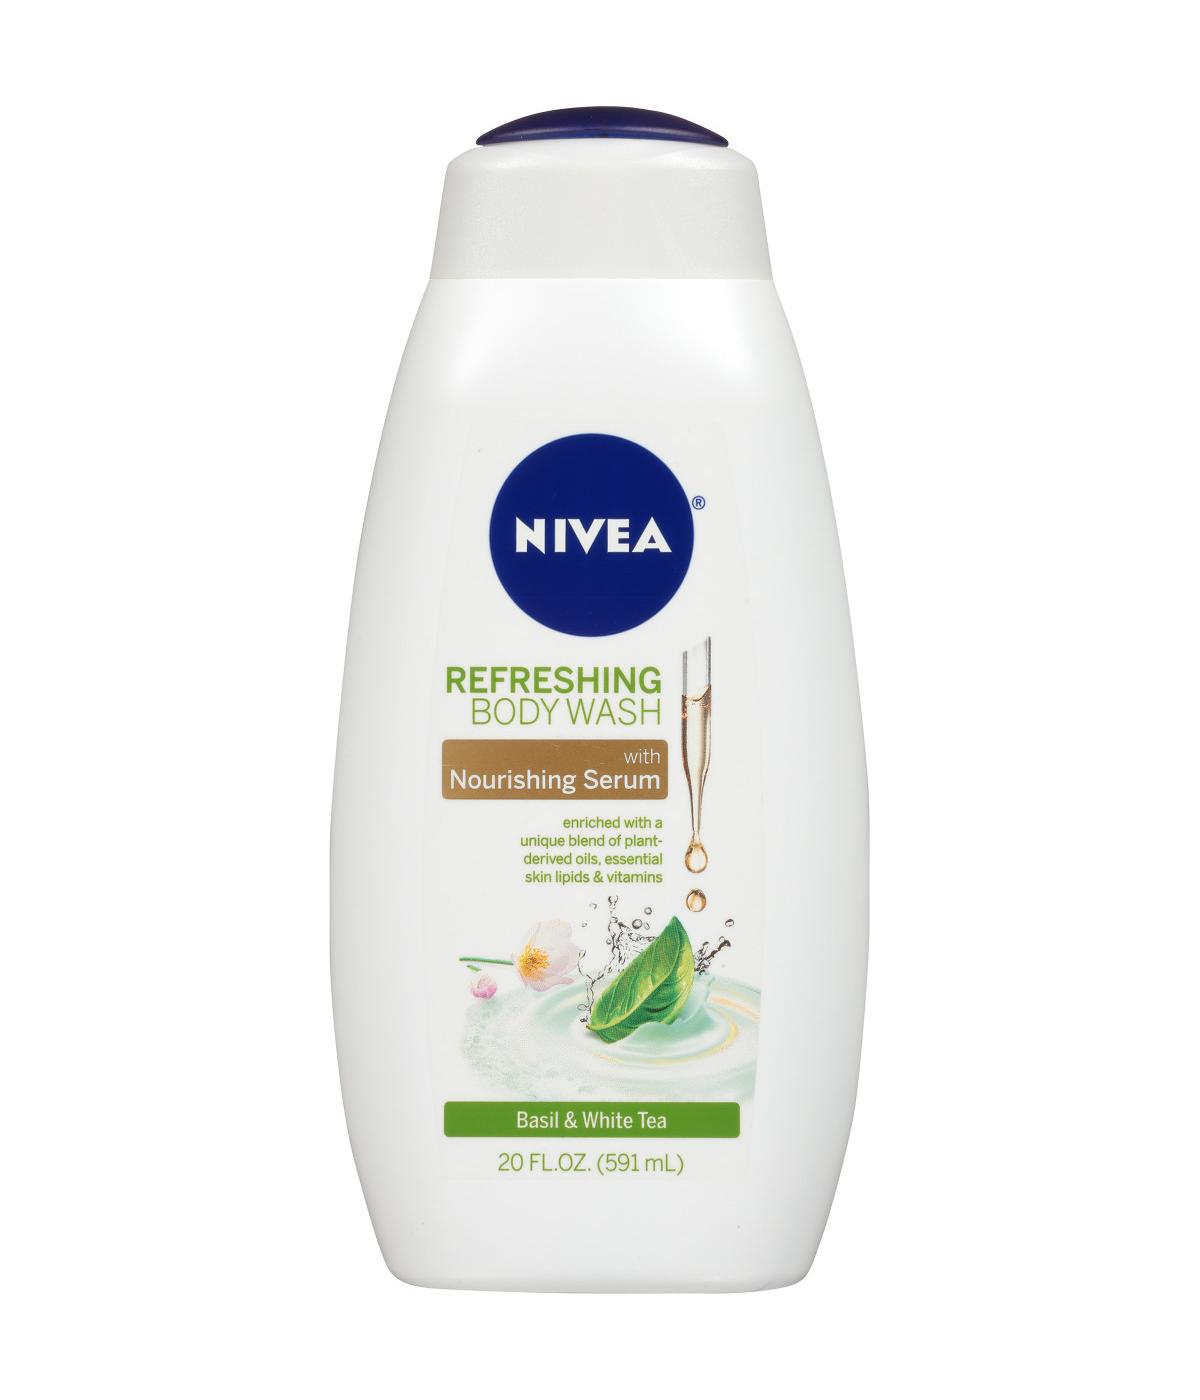 NIVEA Refreshing Body Wash - Basil & White Tea; image 1 of 4